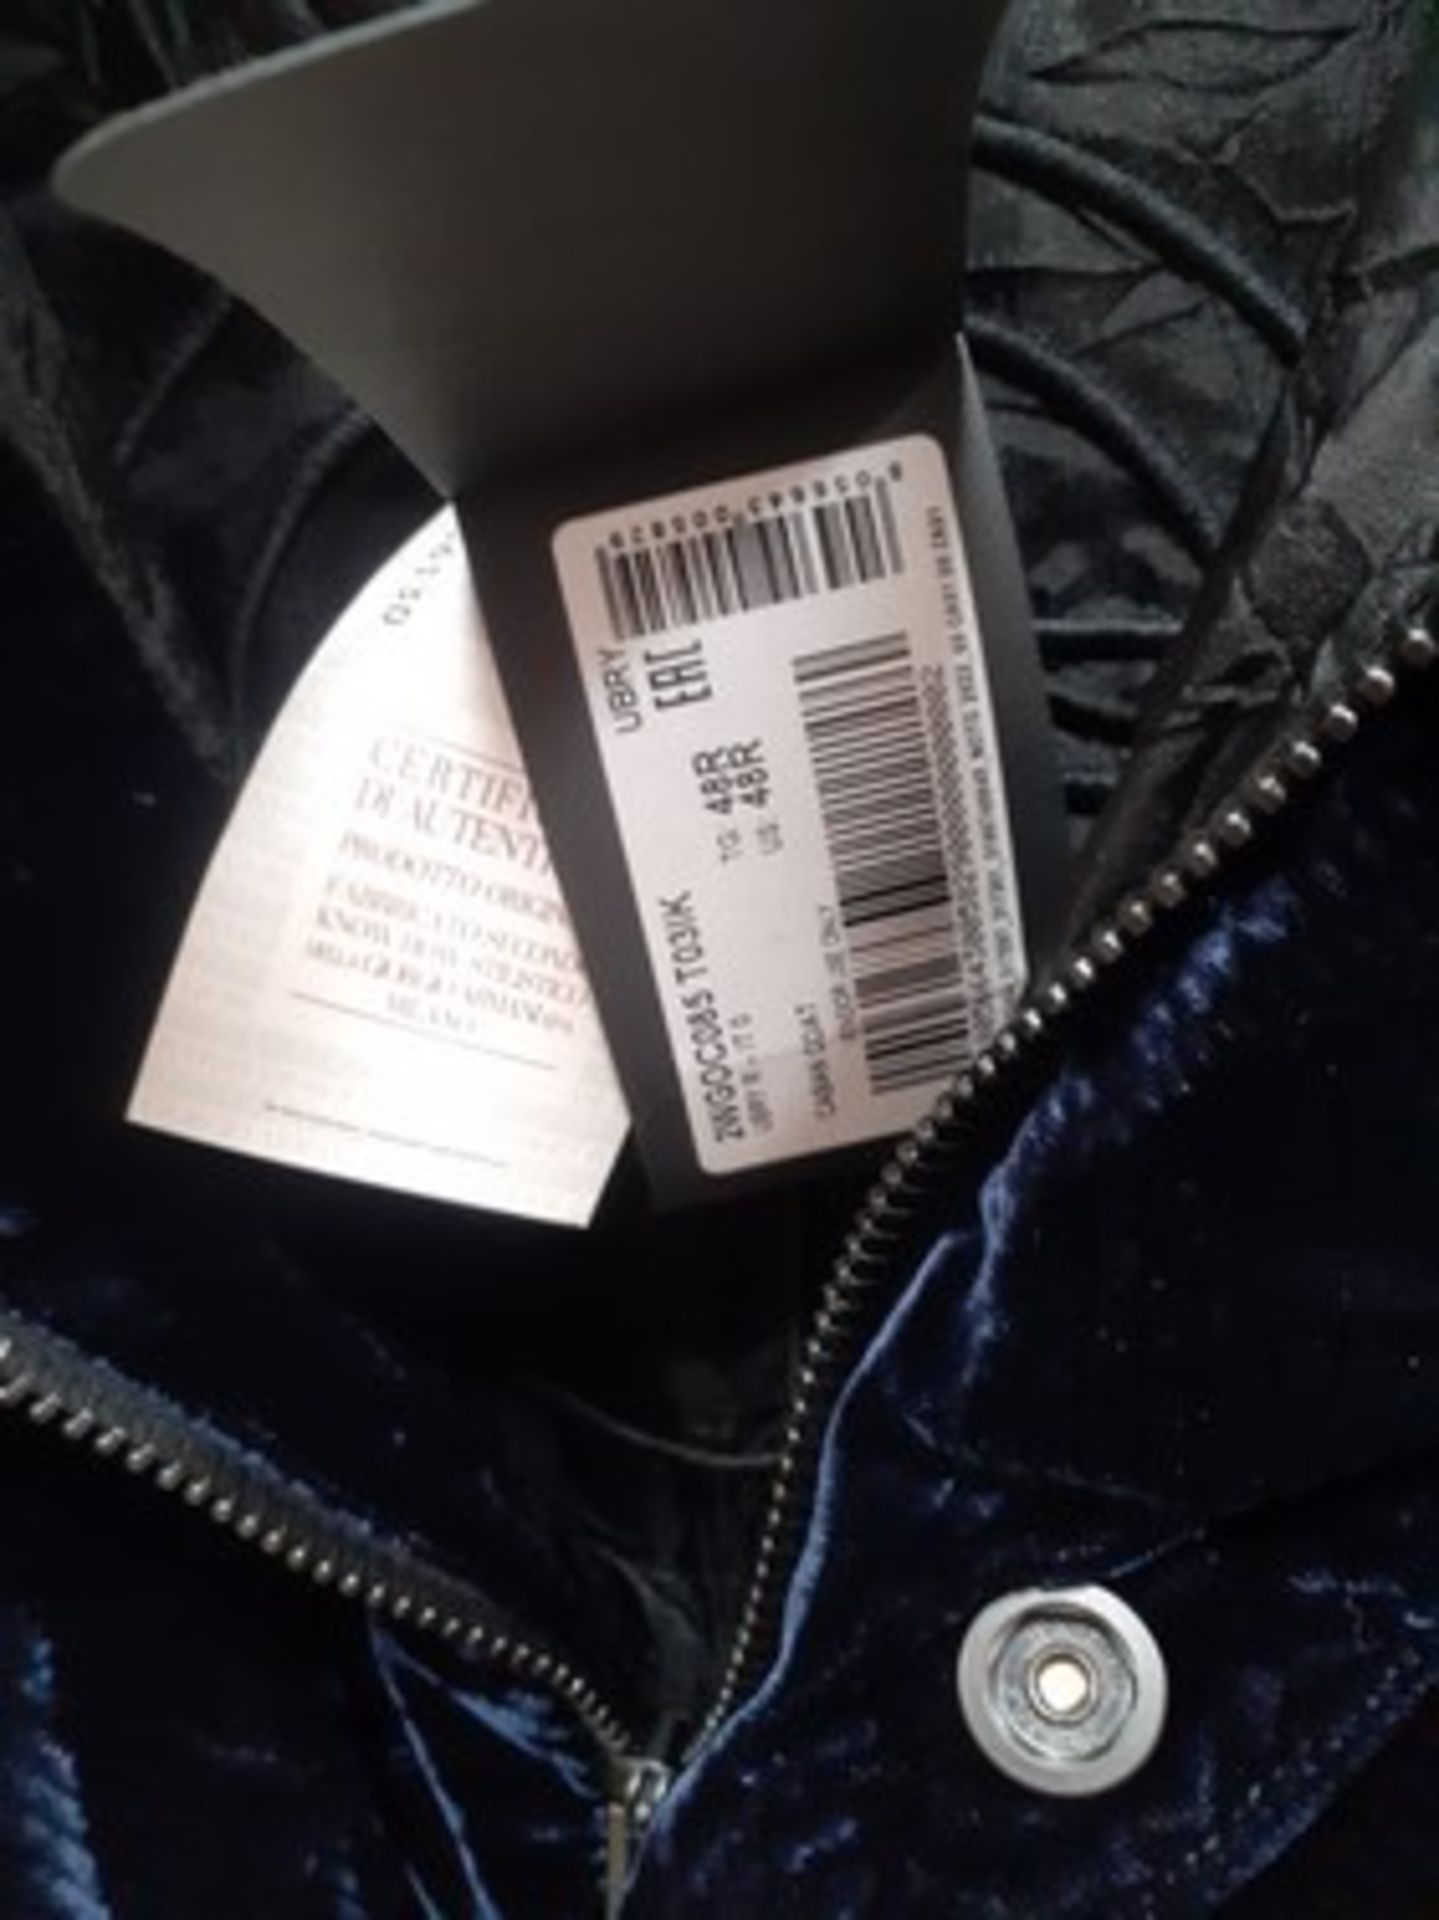 1 x men's coat/jacket, the label states 'Giorgio Armani' Cuban coat. We do not authenticate or - Image 2 of 3